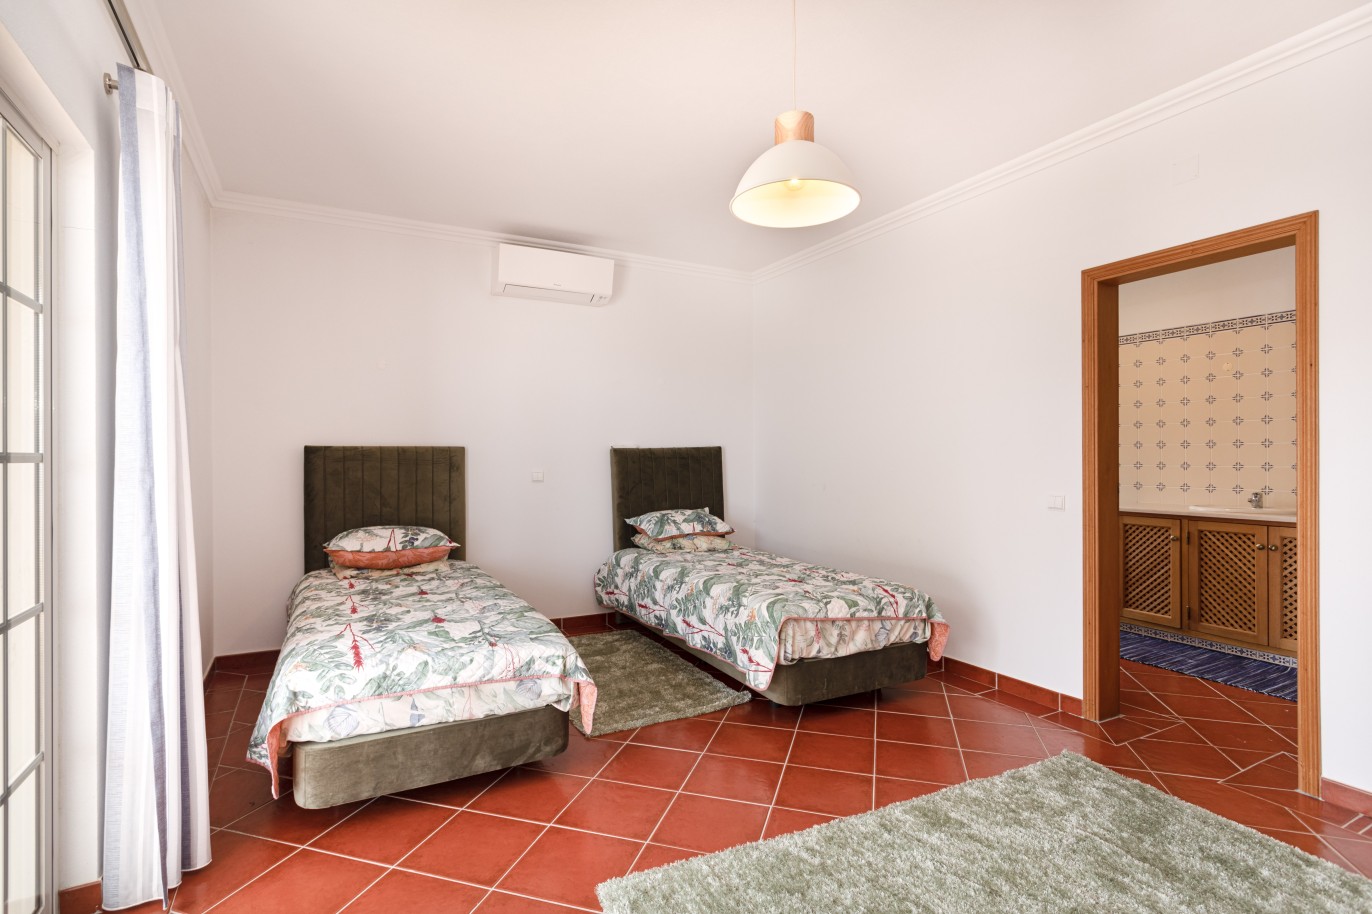 4-Bedroom Villa with swimming pool, for sale in Boliqueime, Loulé, Algarve_242635